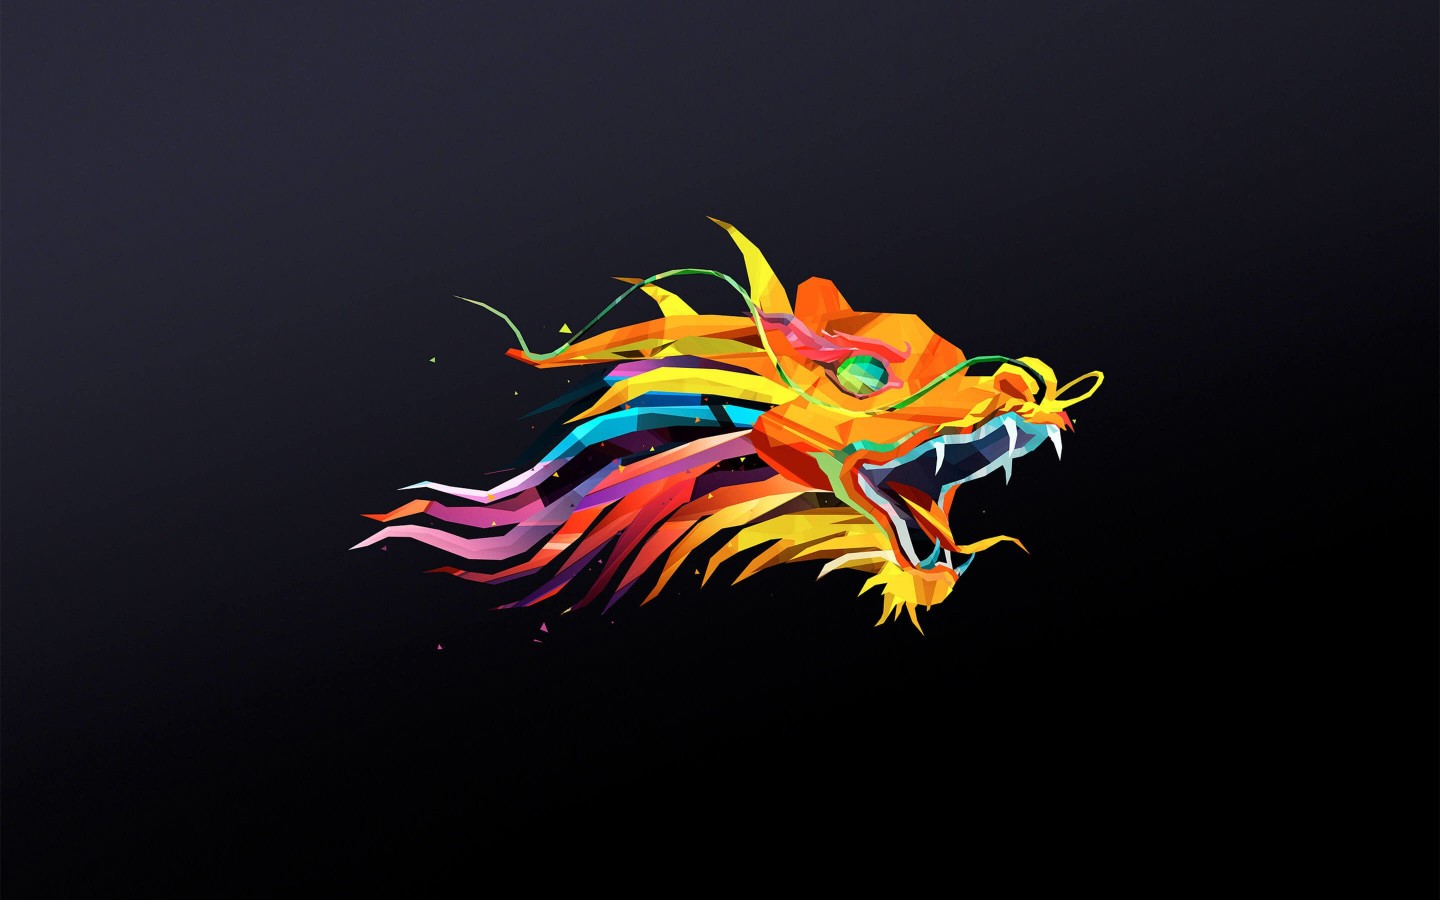 The Dragon Wallpaper for Desktop 1440x900